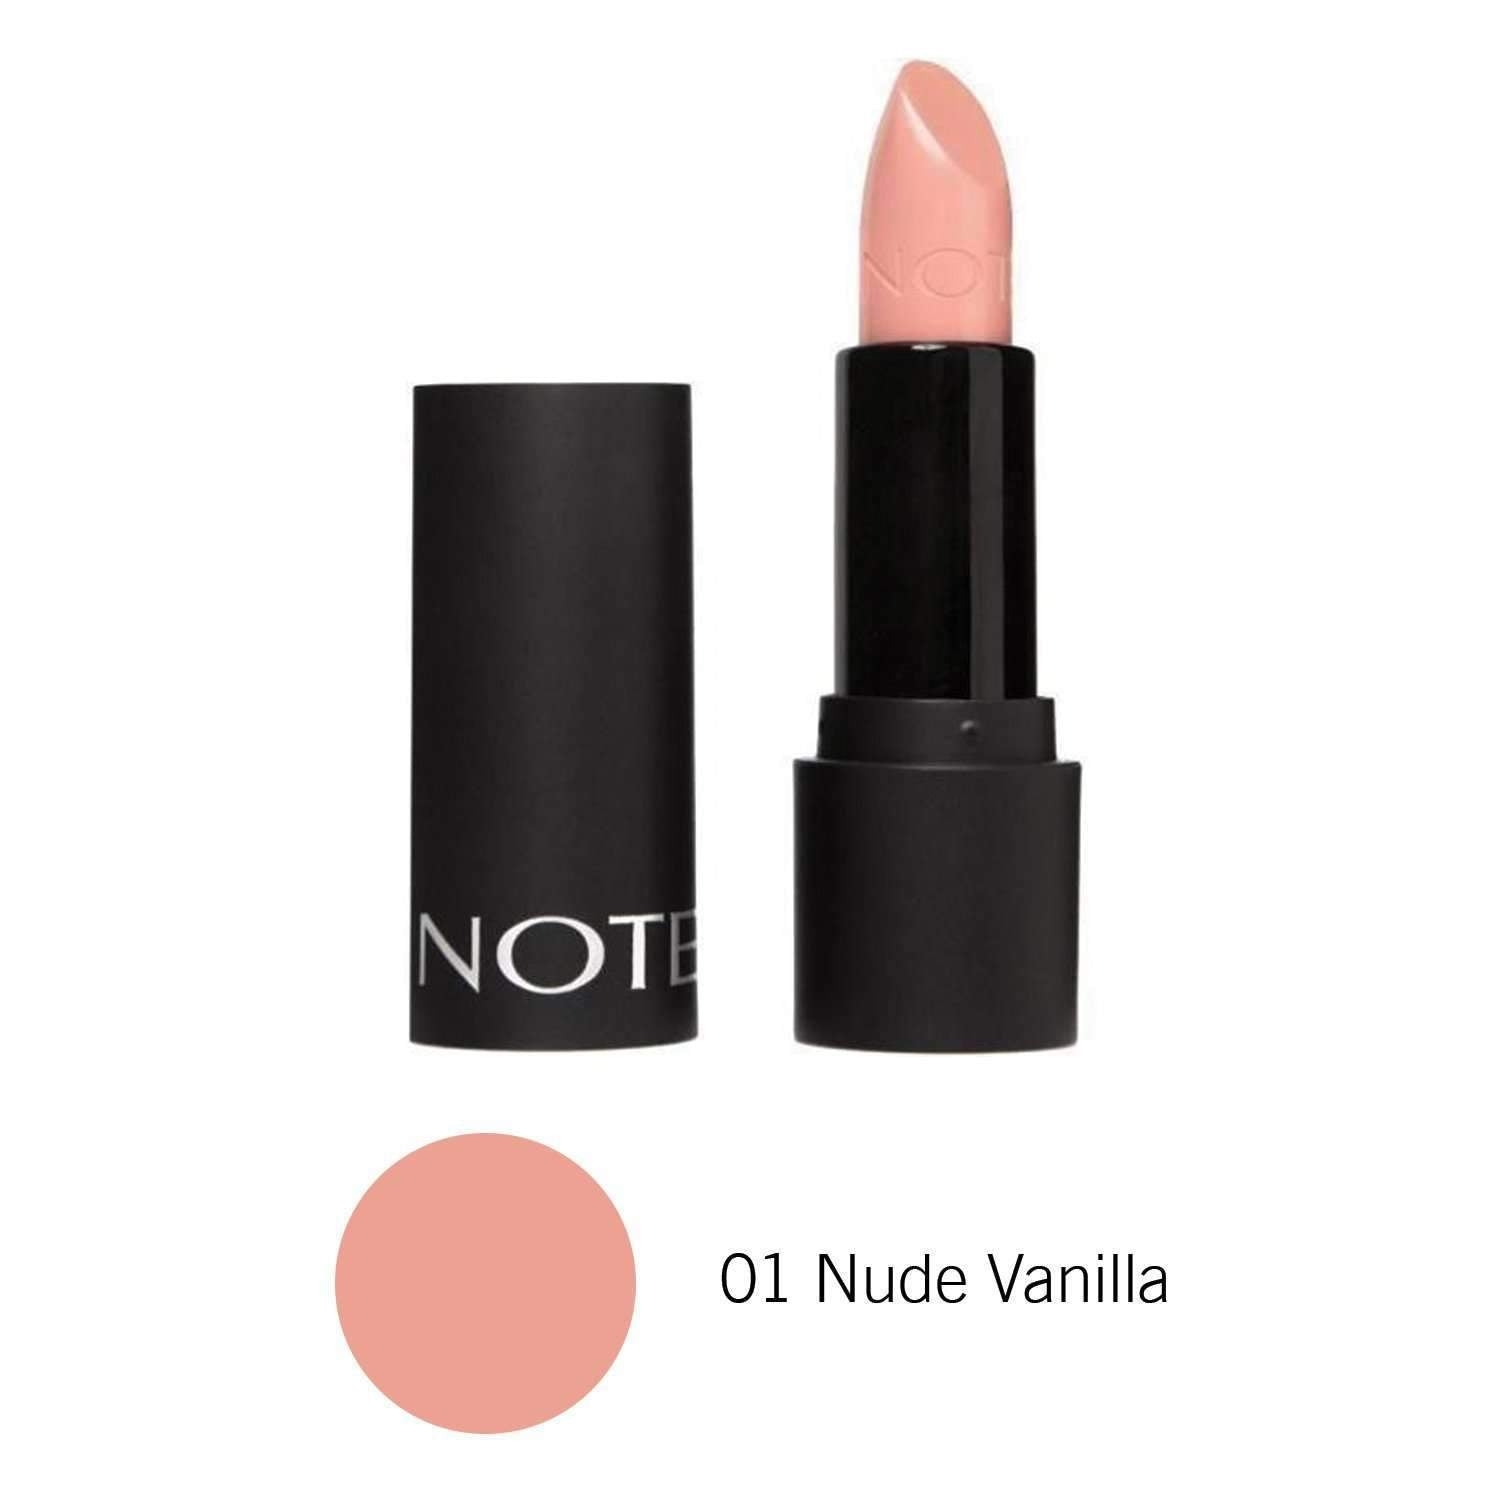 NOTE | Nude Vanilla Lipstick